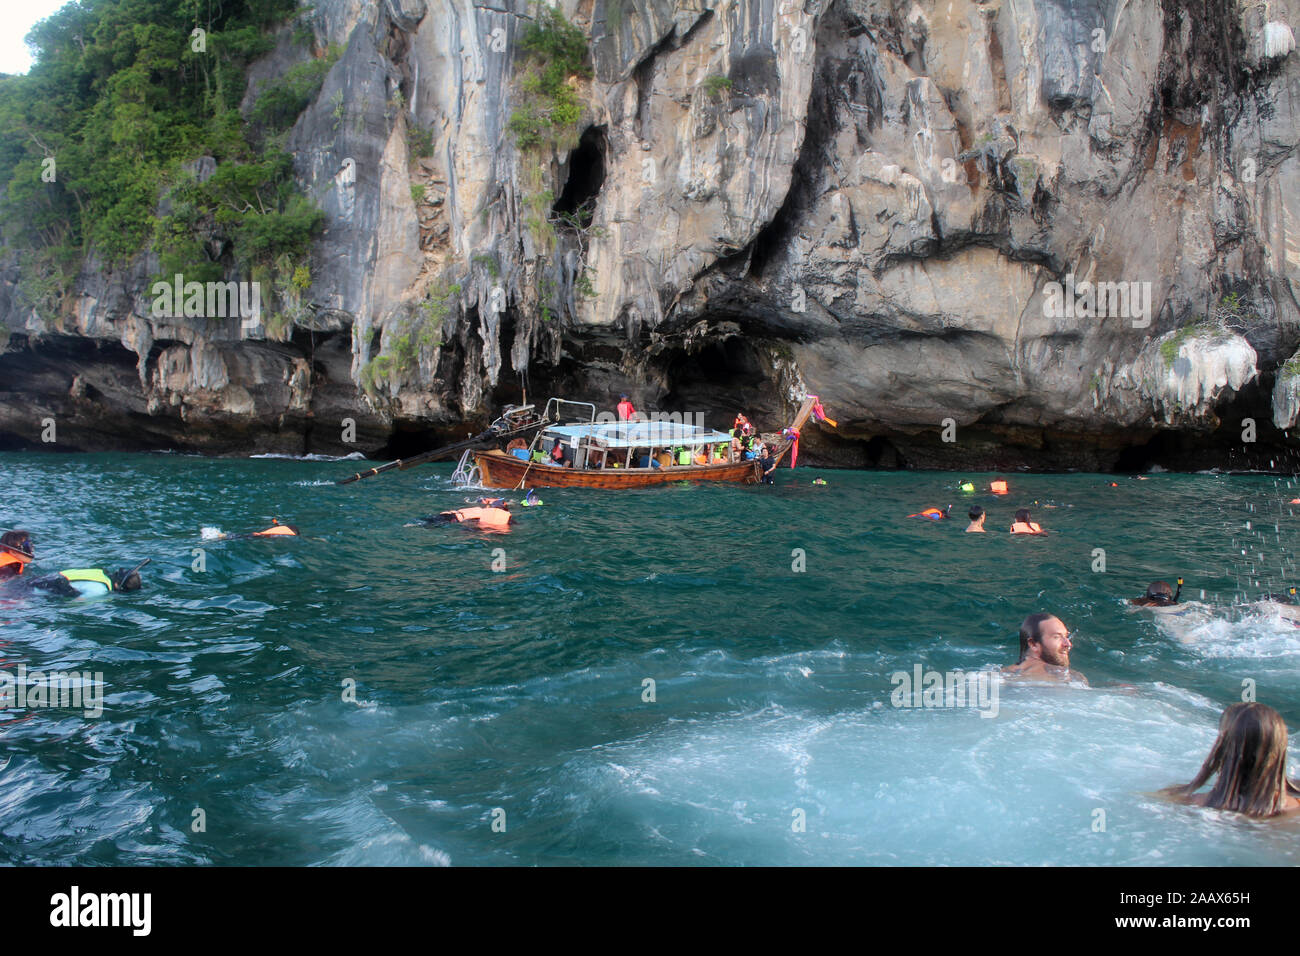 Ko Tapu James Bond Island, Phang Nga National Park Thailand Stock Photo